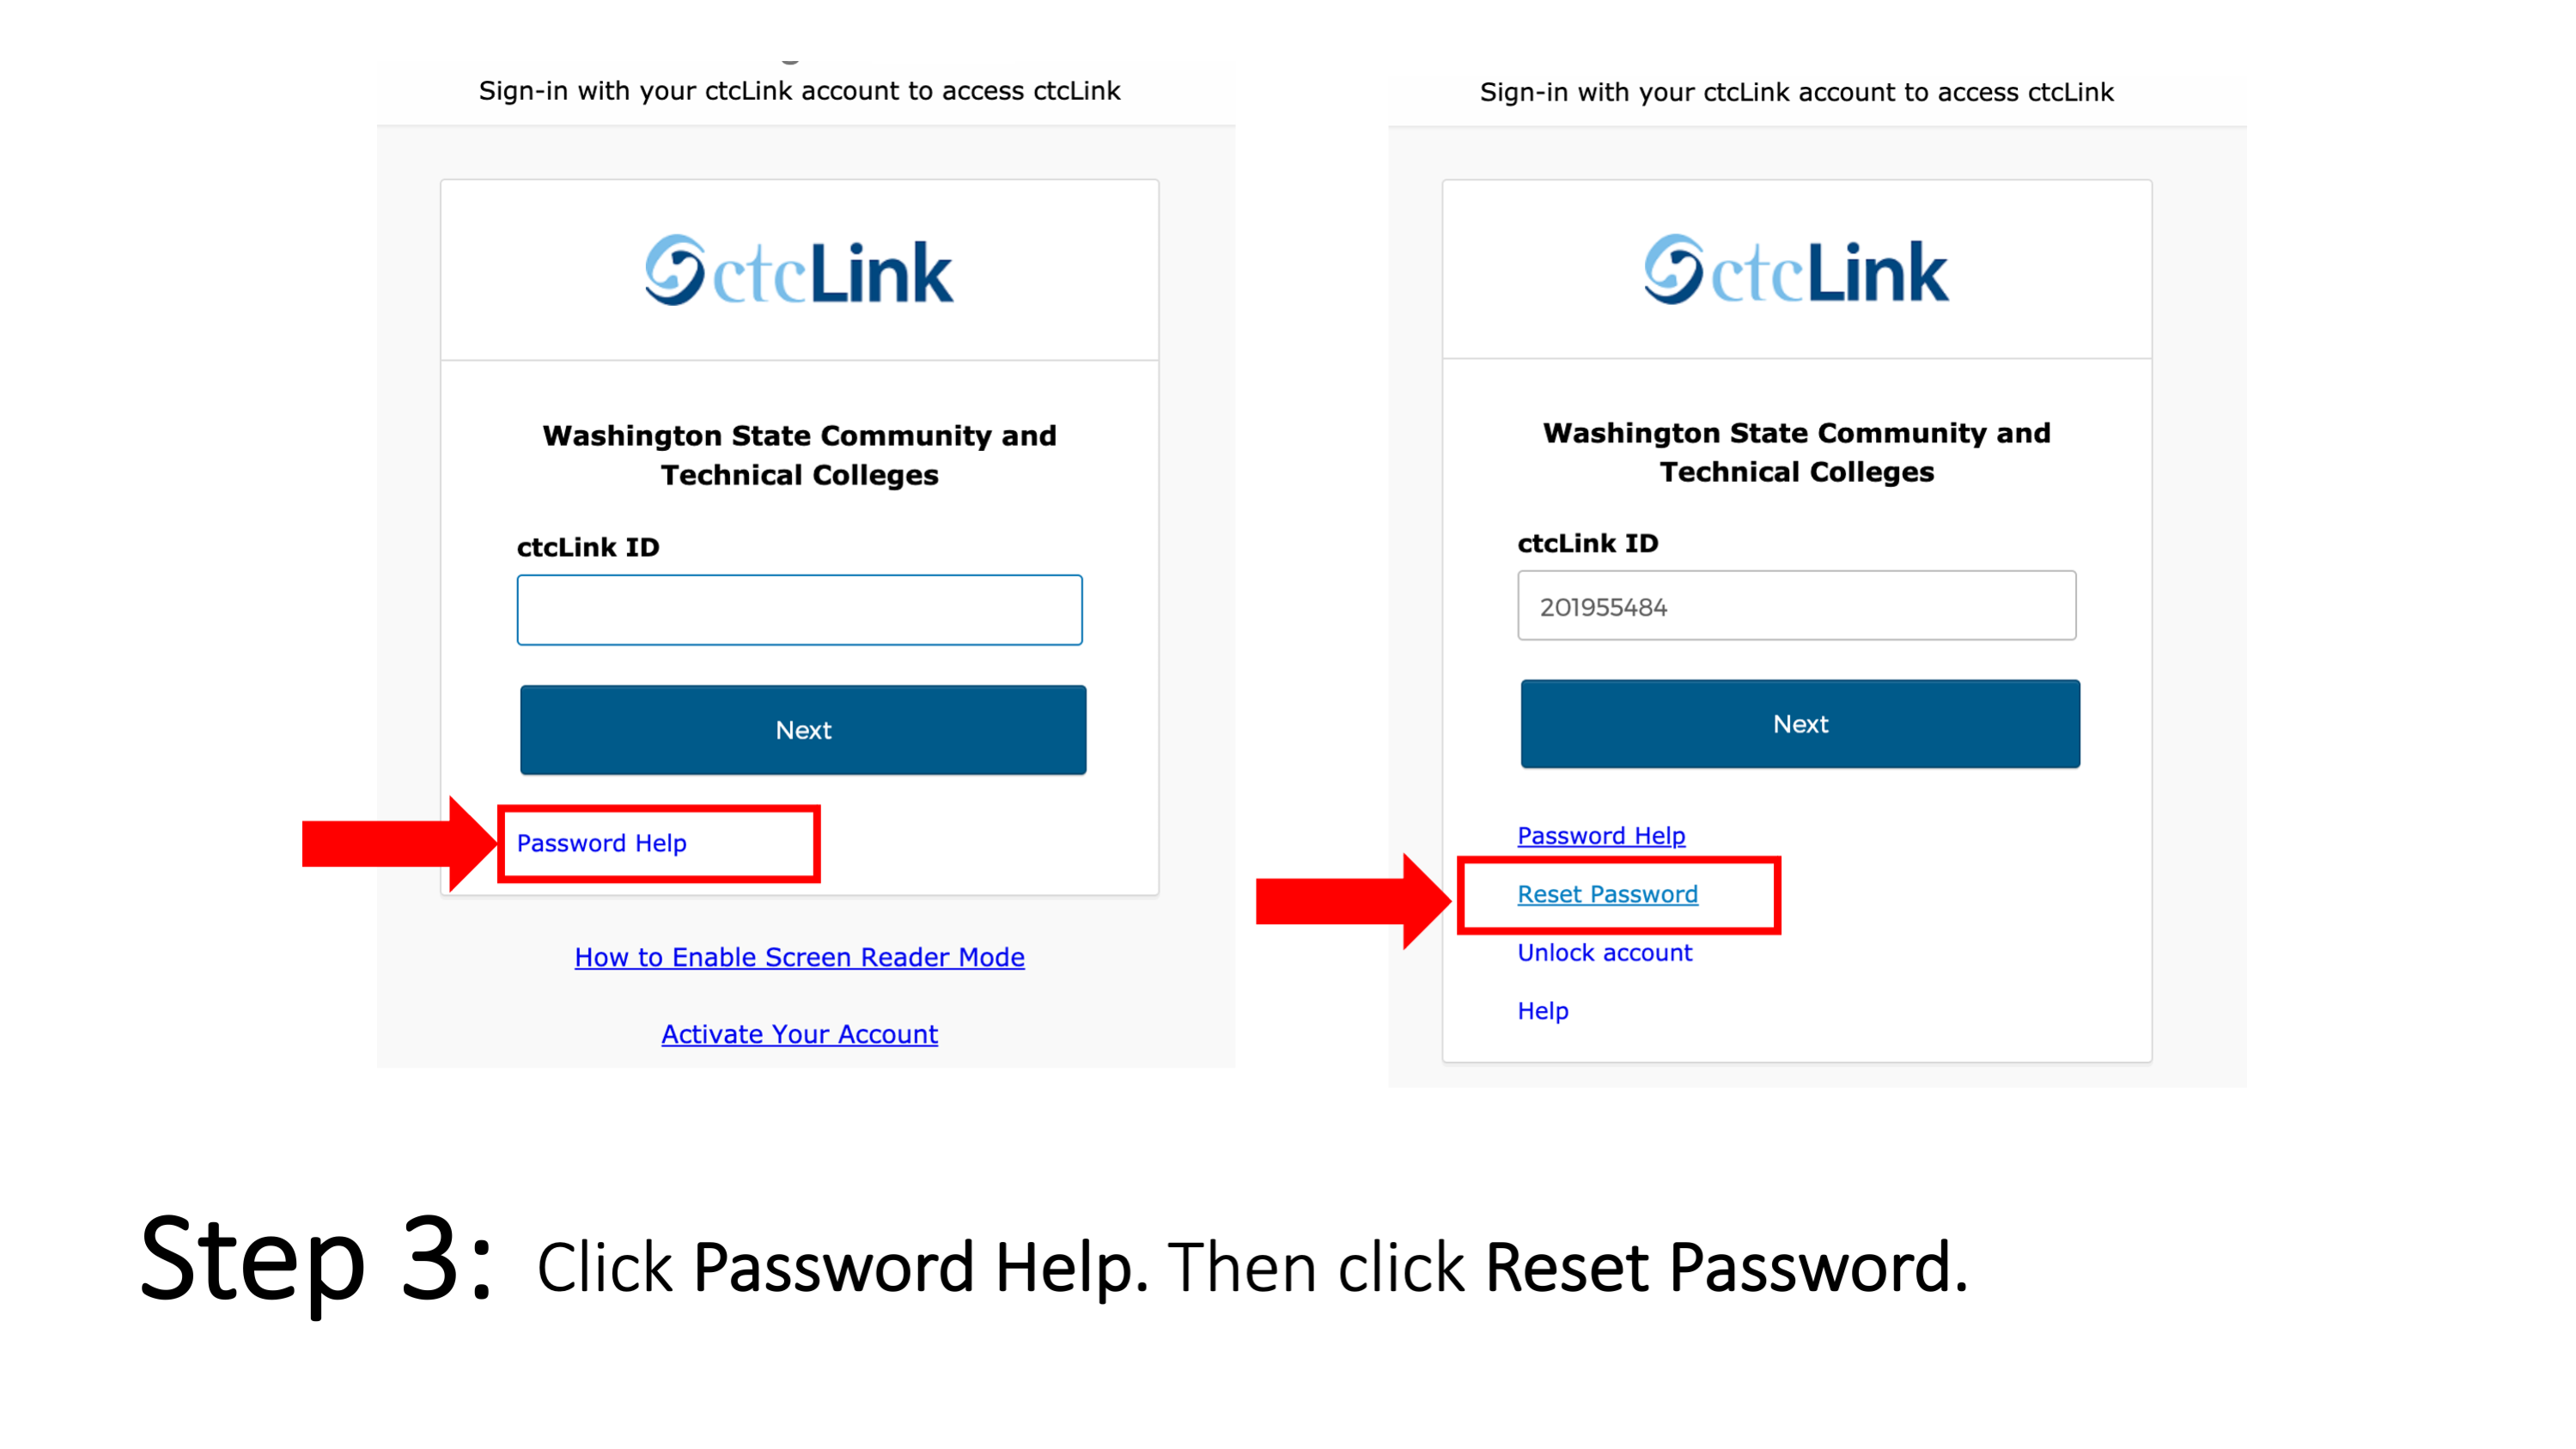 Step 3: Click Password Help. Then click Reset Password.